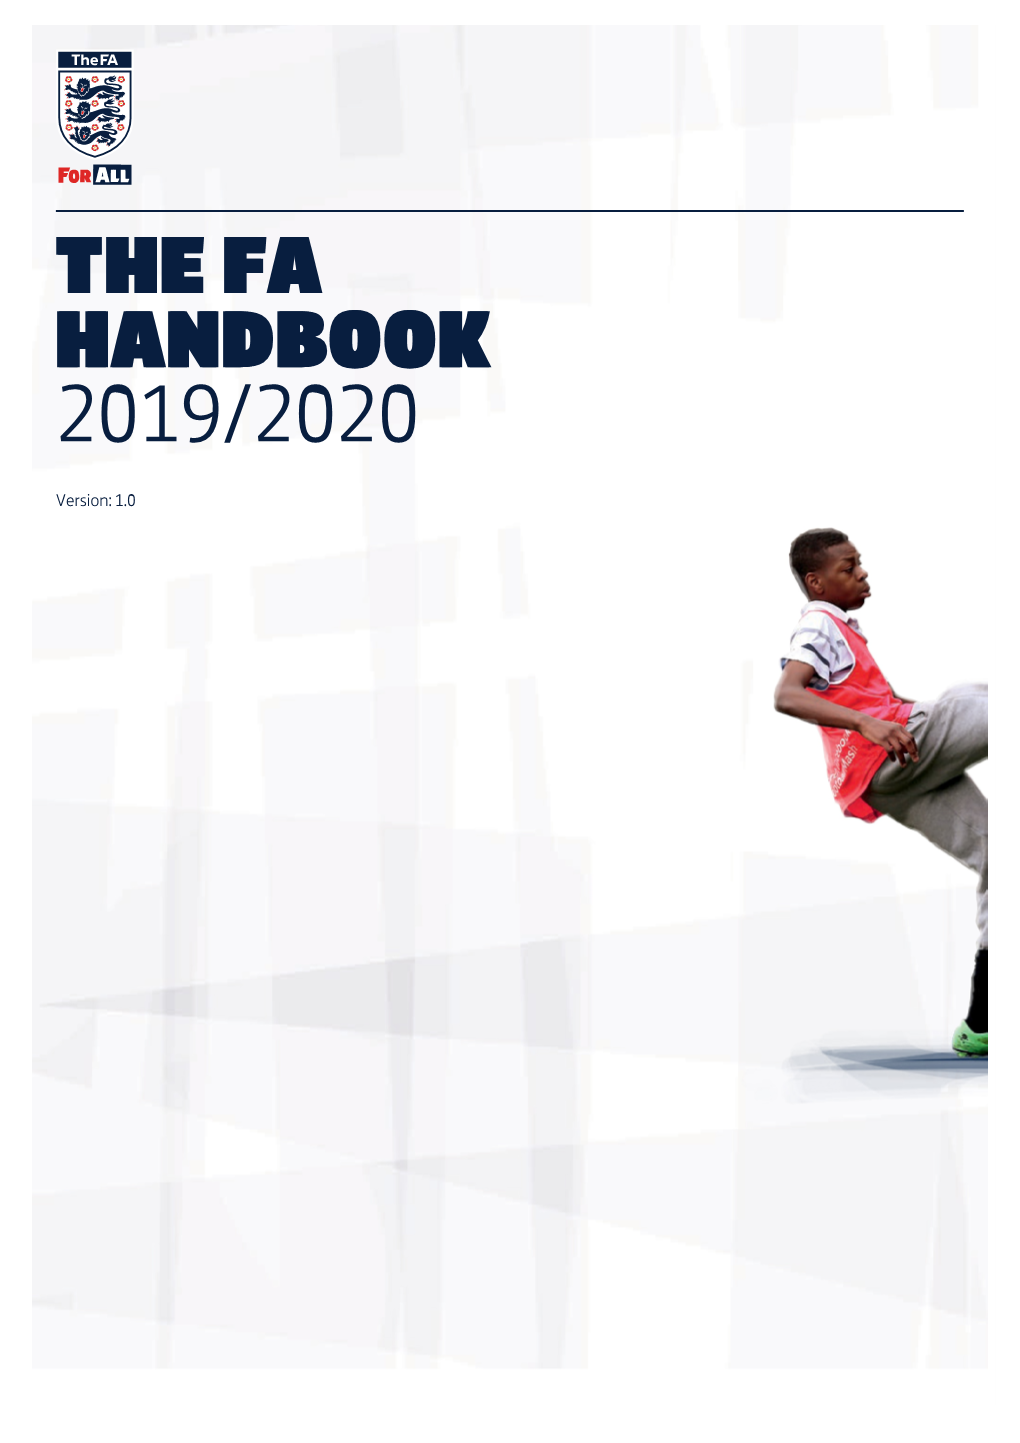 The FA Handbook 2019/2020